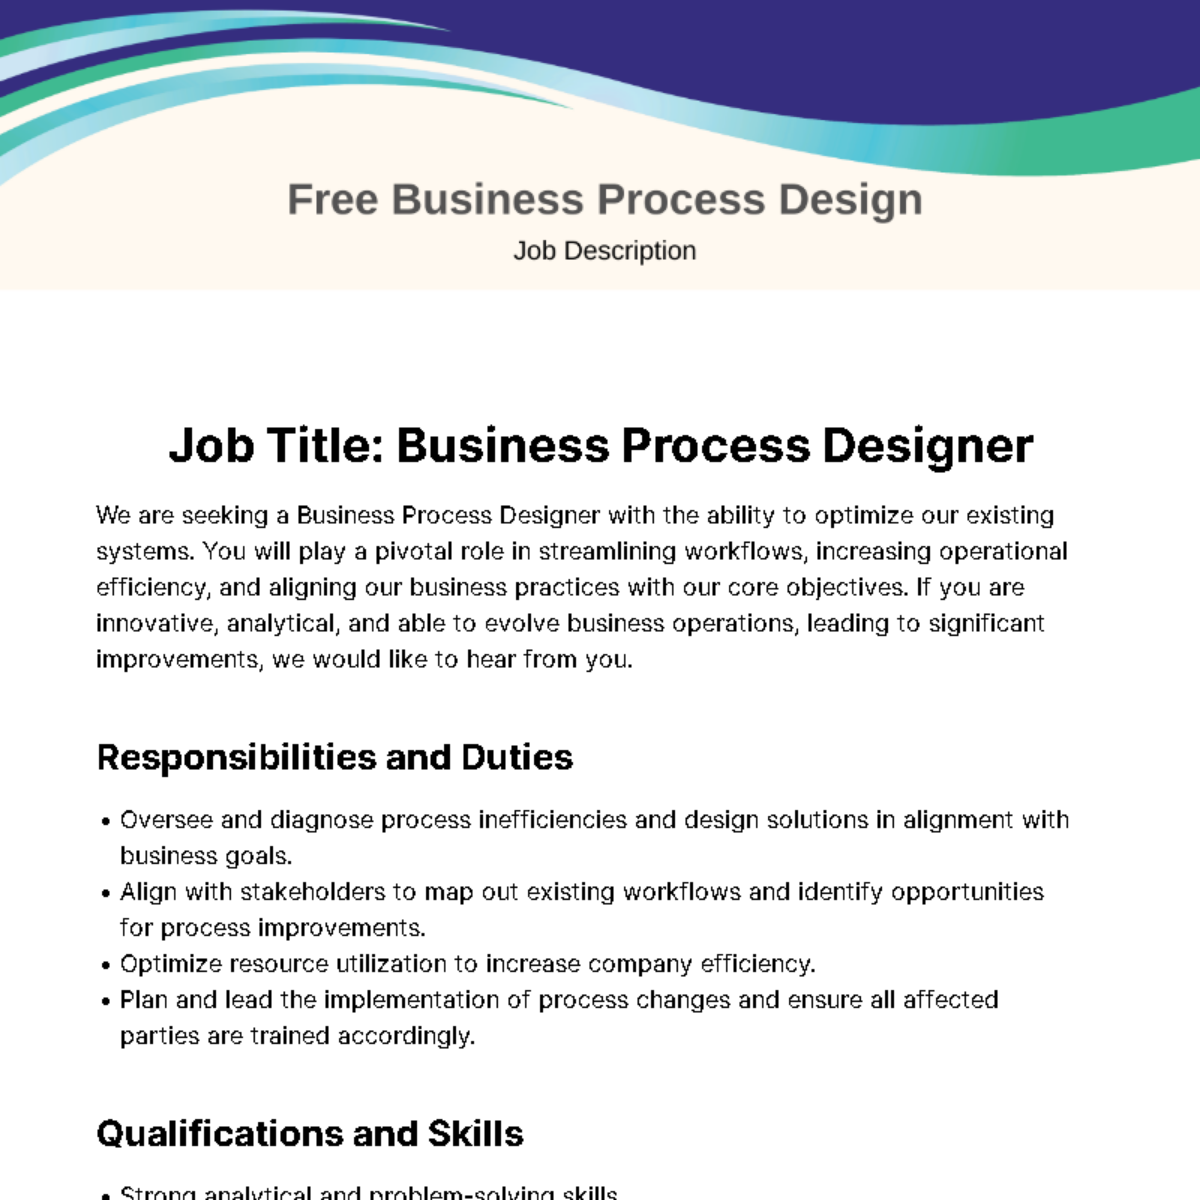 Free Business Process Design Job Description Template